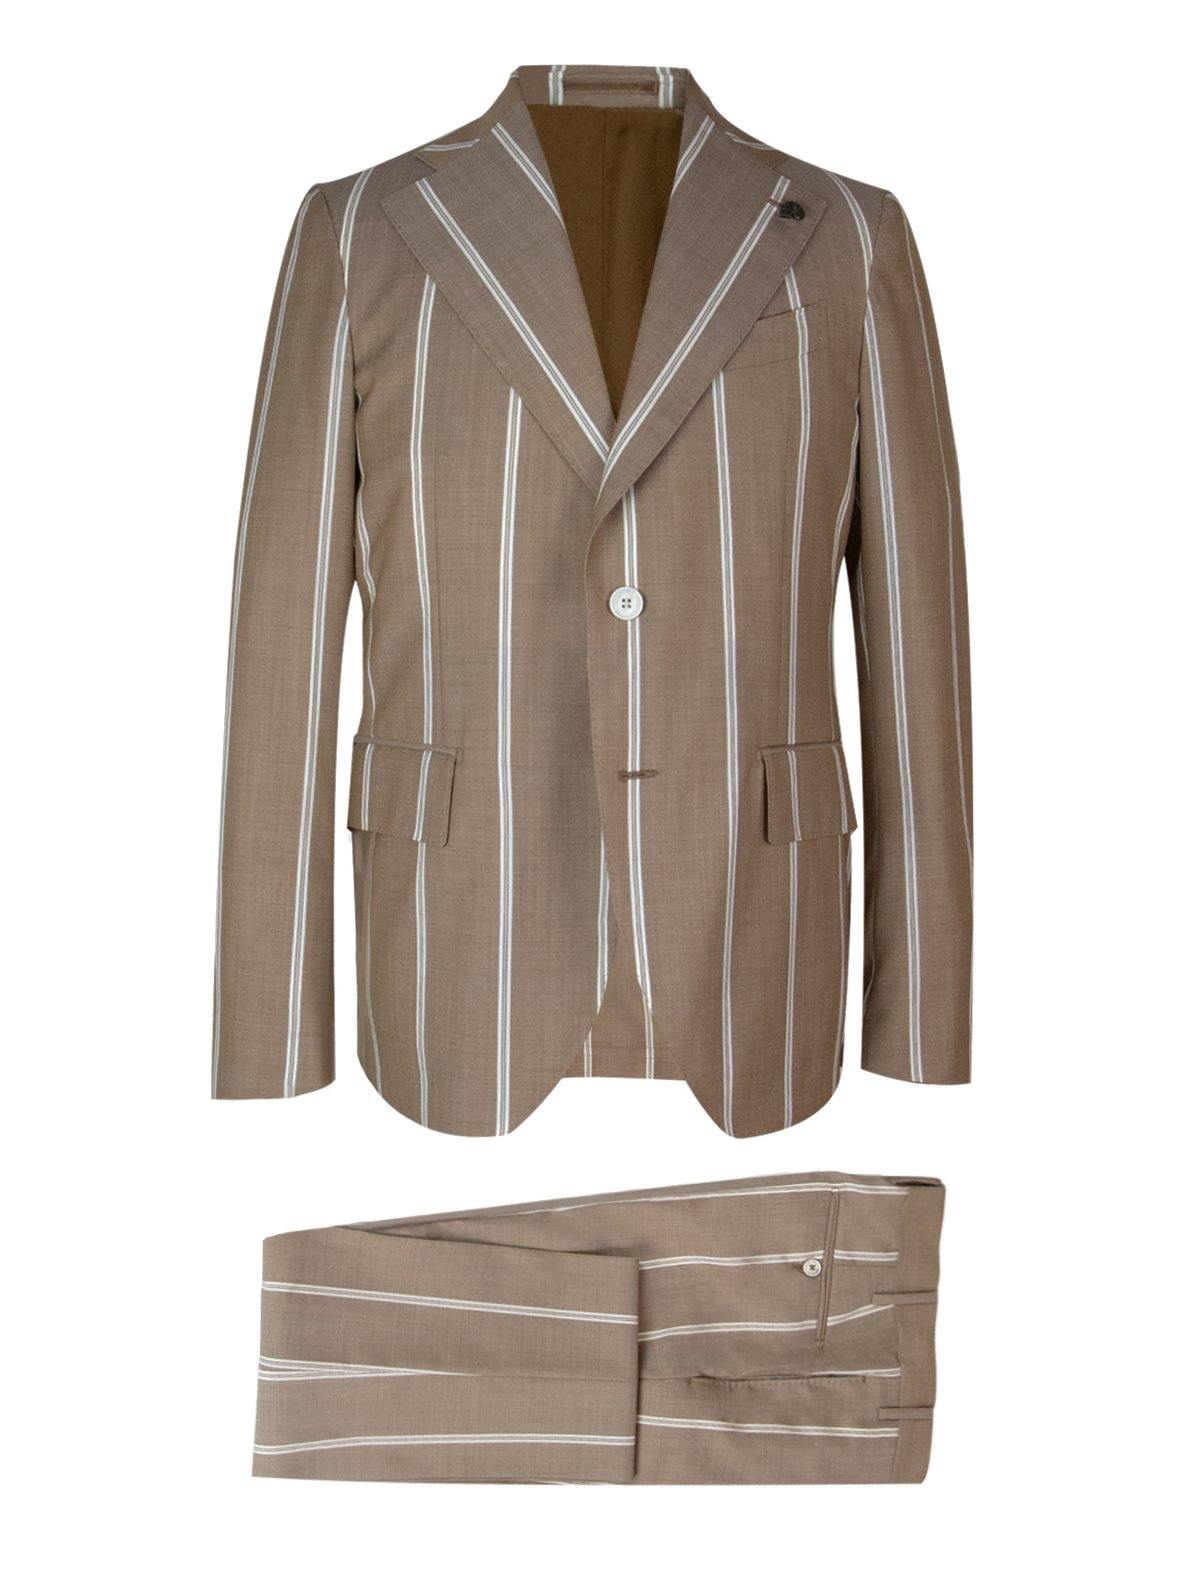 GABRIELE PASINI 2-Piece Wool Suit in Brown Ticking Stripes | CLOSET Singapore